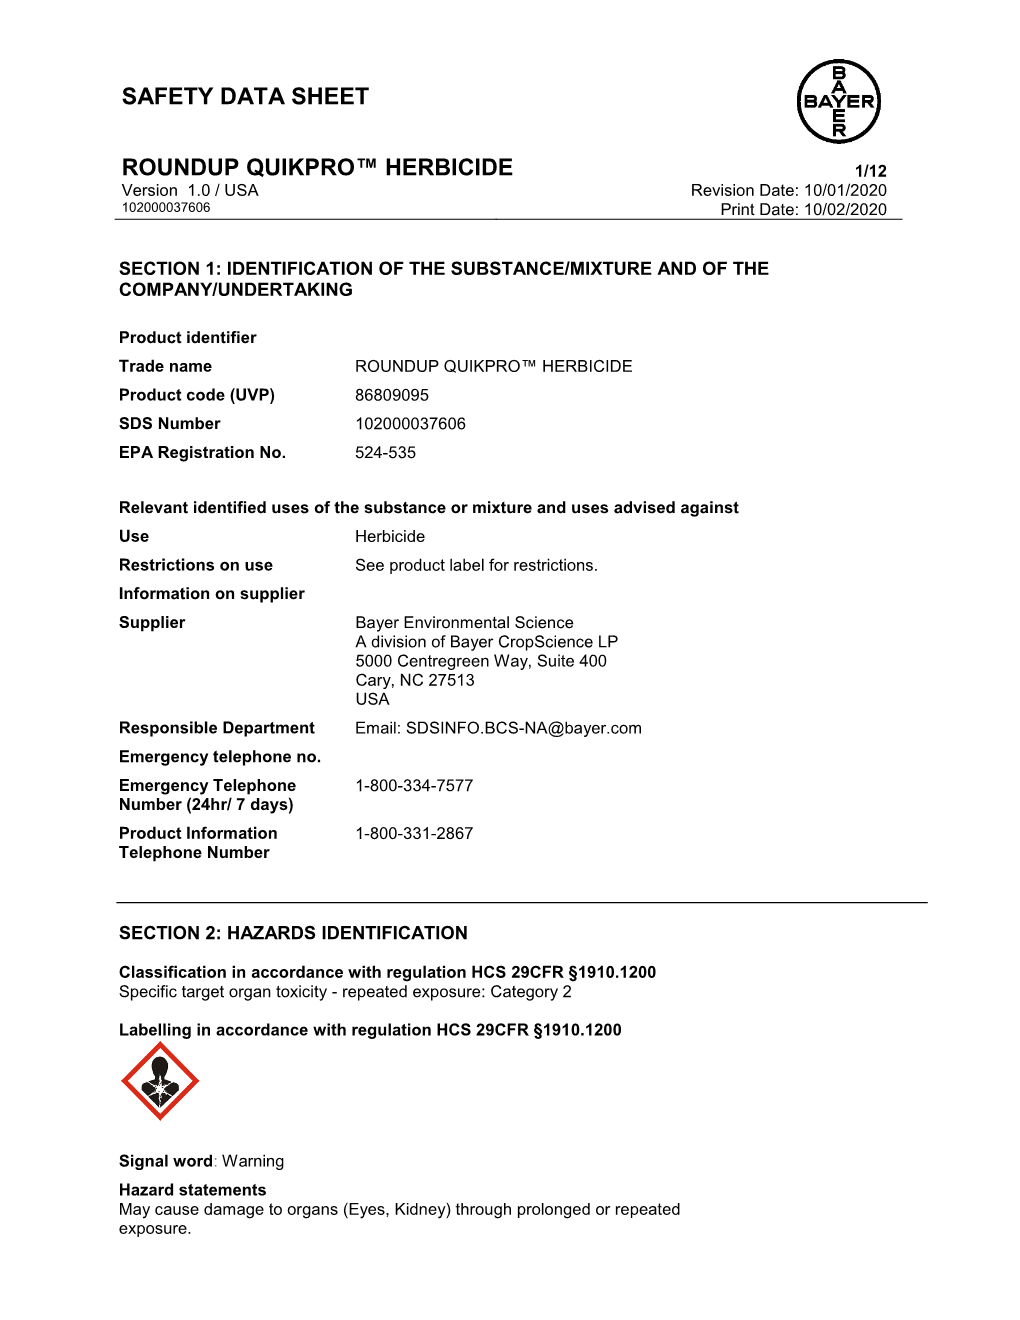 Safety Data Sheet Roundup Quikpro™ Herbicide